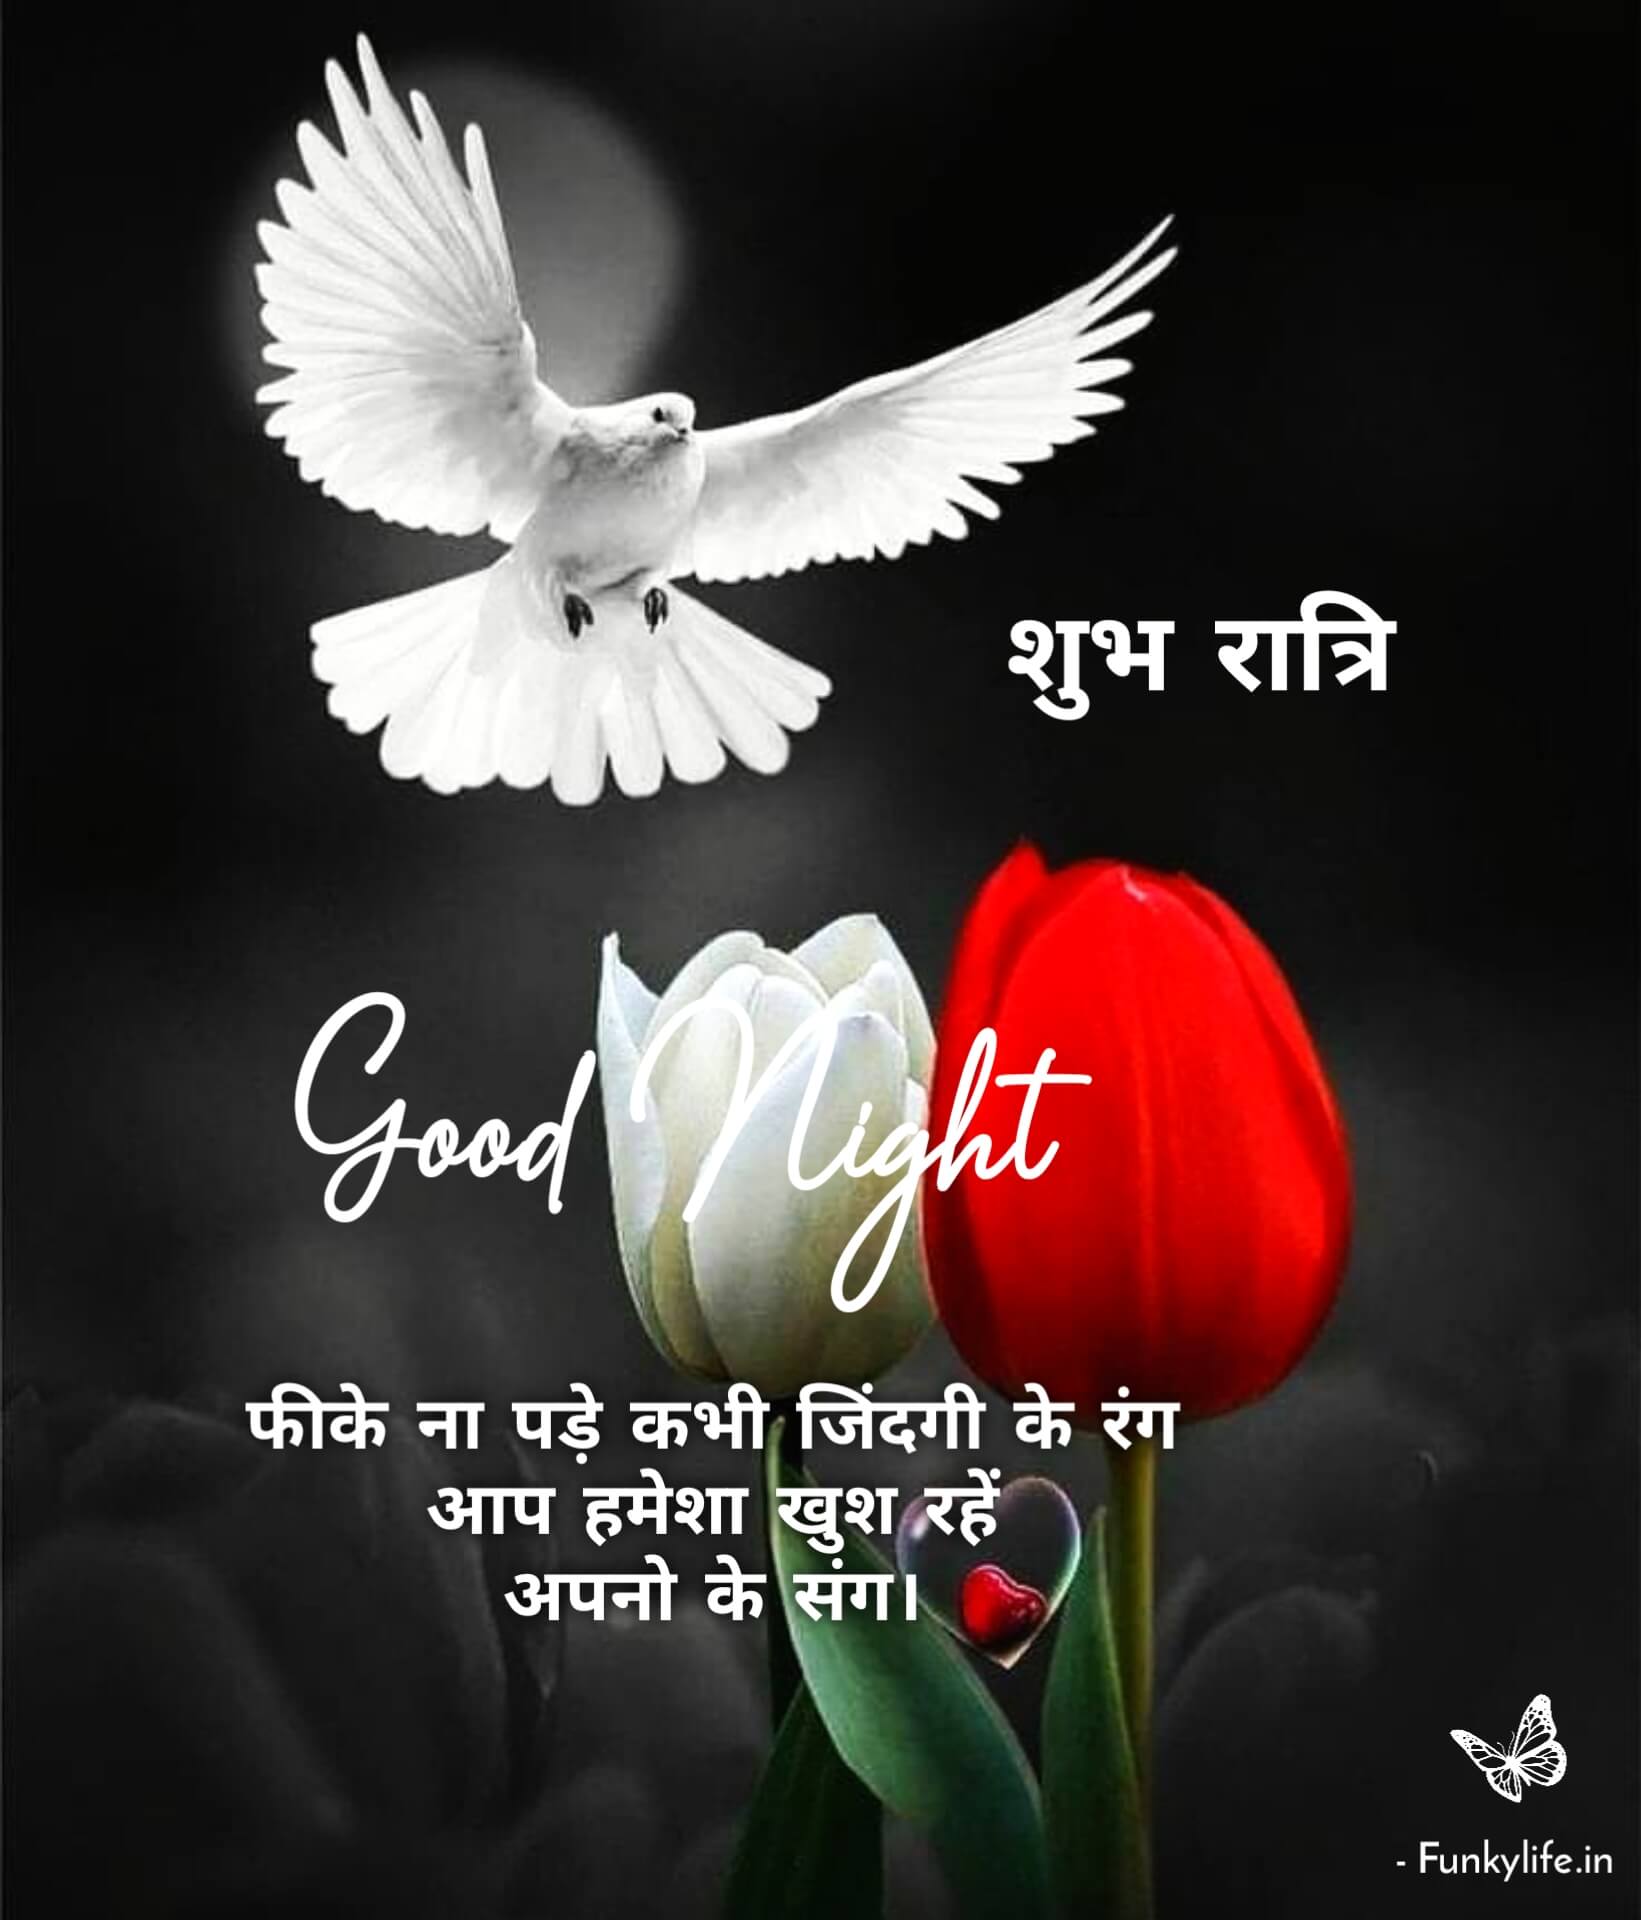 Good Night Images in Hindi